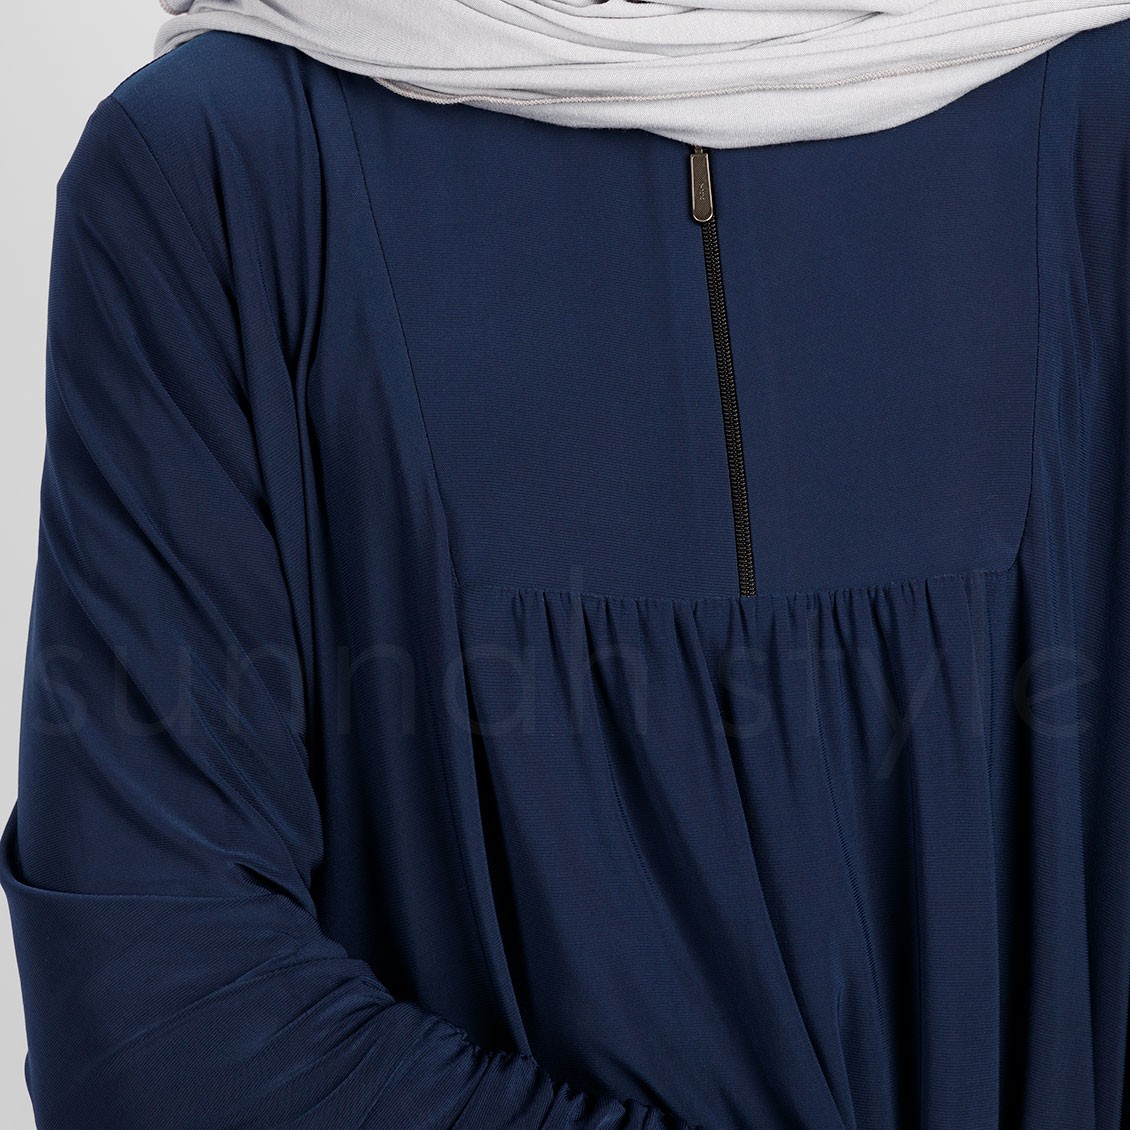 Sunnah Style Girls Flourish Jersey Abaya Navy Blue